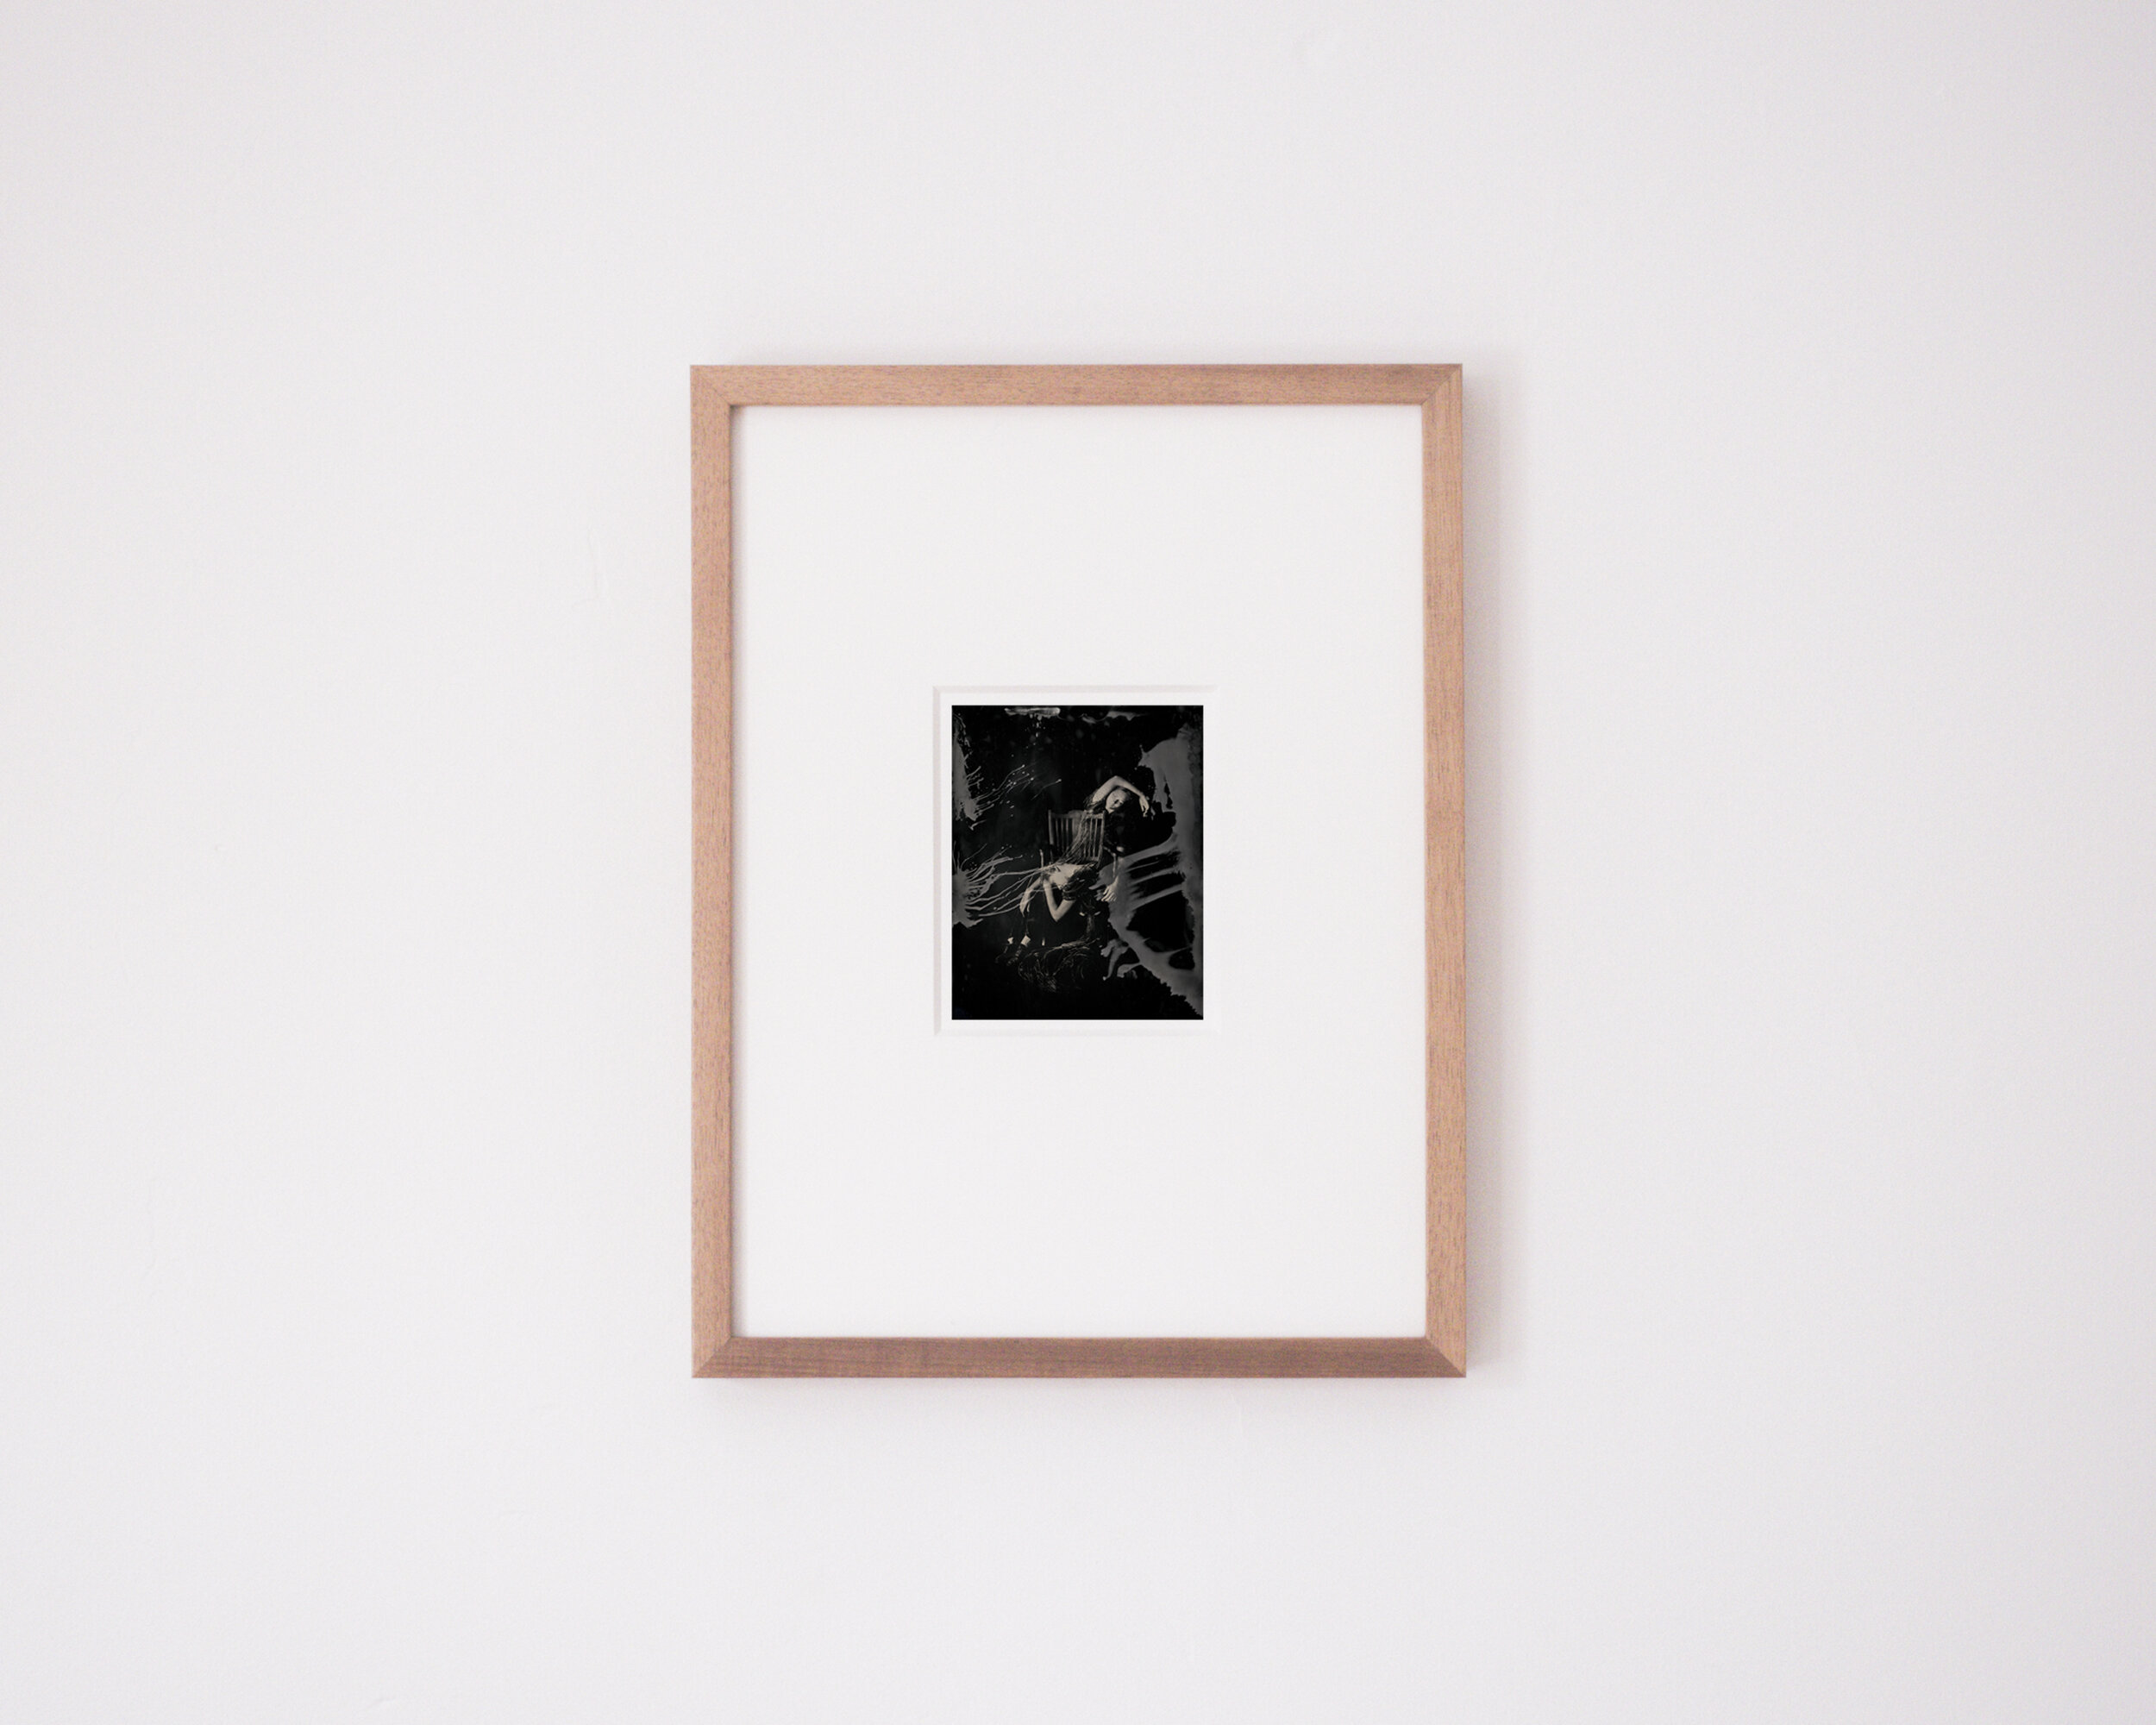   Caducity’s Daughters II  (framed 4 x 5” aluminotype, 2020) 